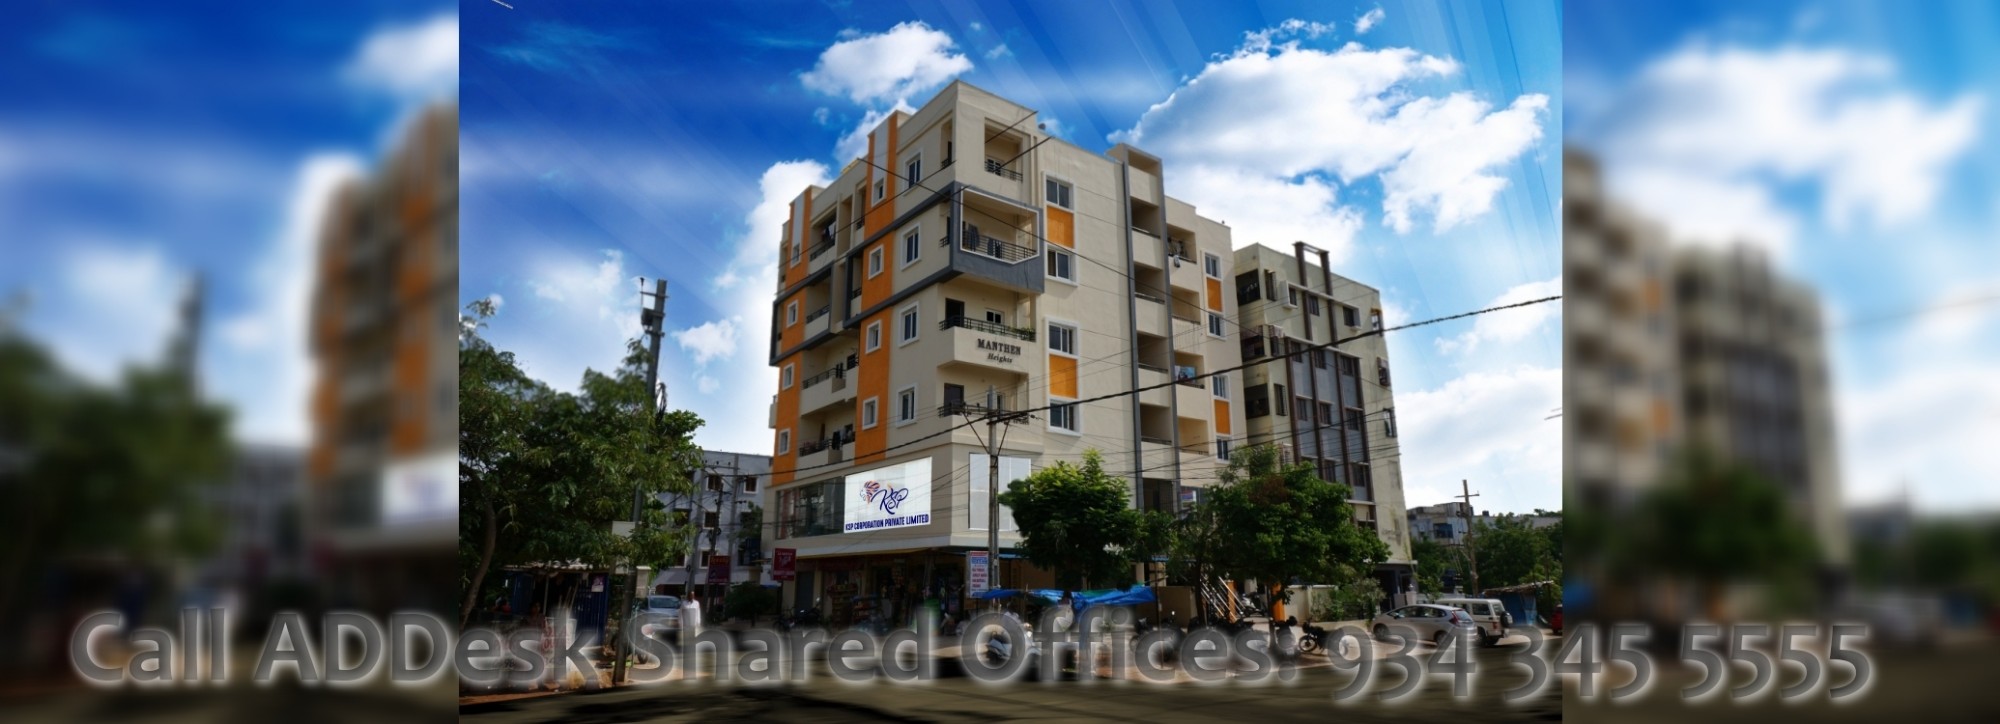 ADDesk Shared & Virtual Office Solutions in Kukatpally, Hyderabad-500085 |  Sulekha Hyderabad